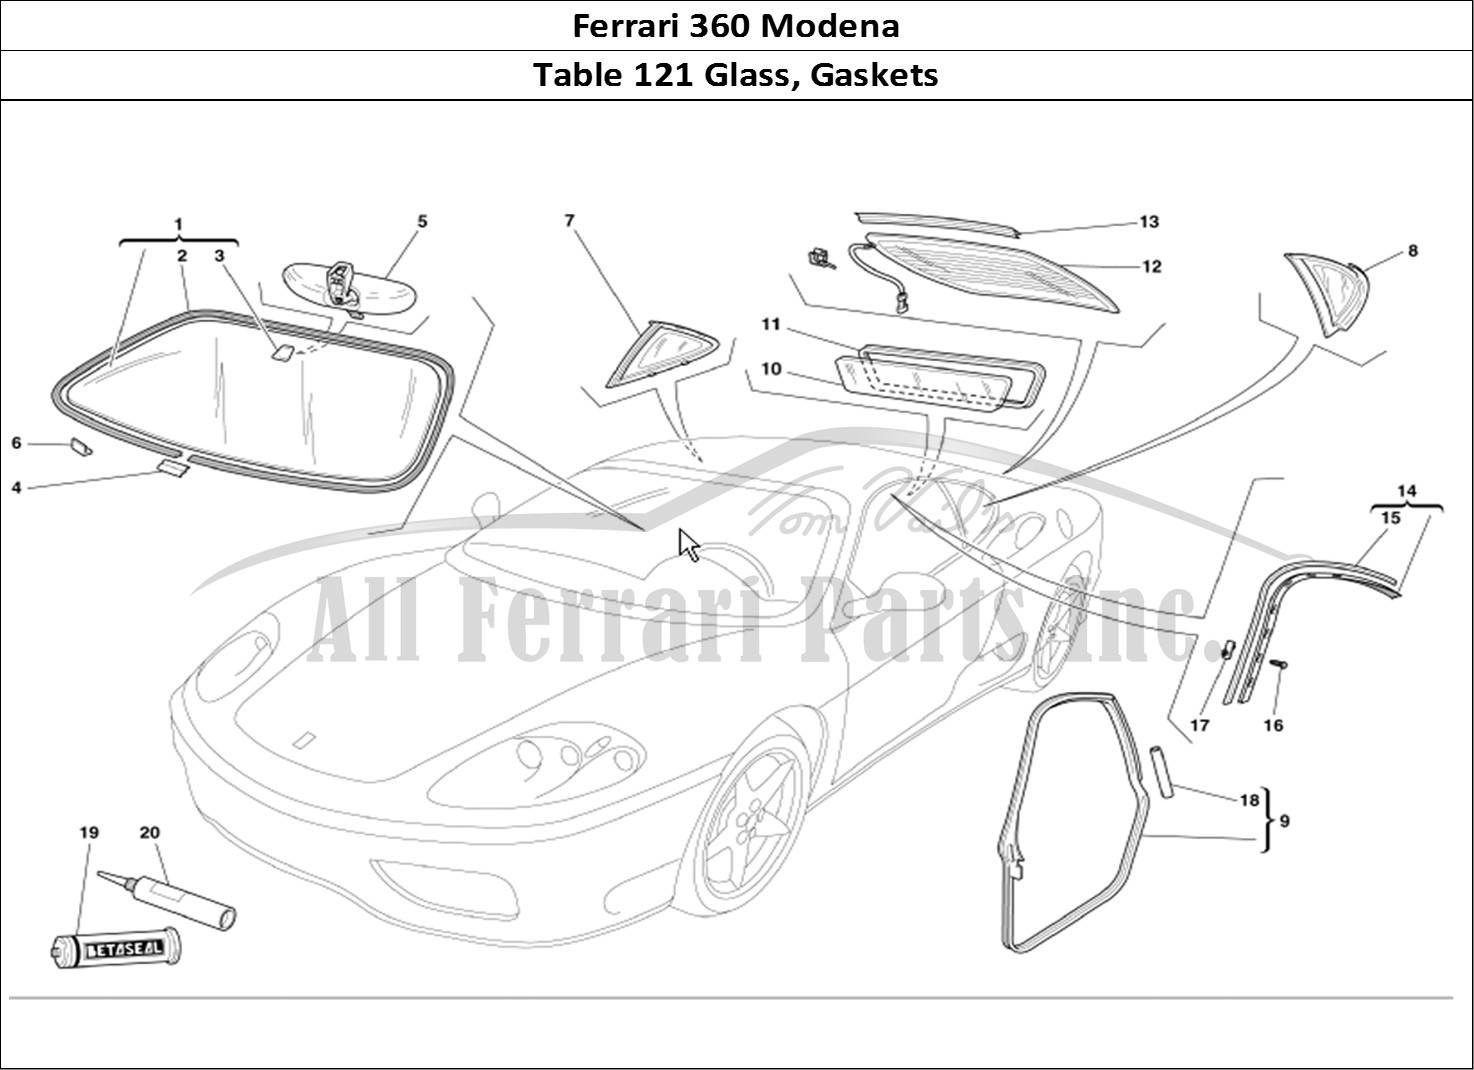 Ferrari Parts Ferrari 360 Modena Page 121 Glasses and Gaskets